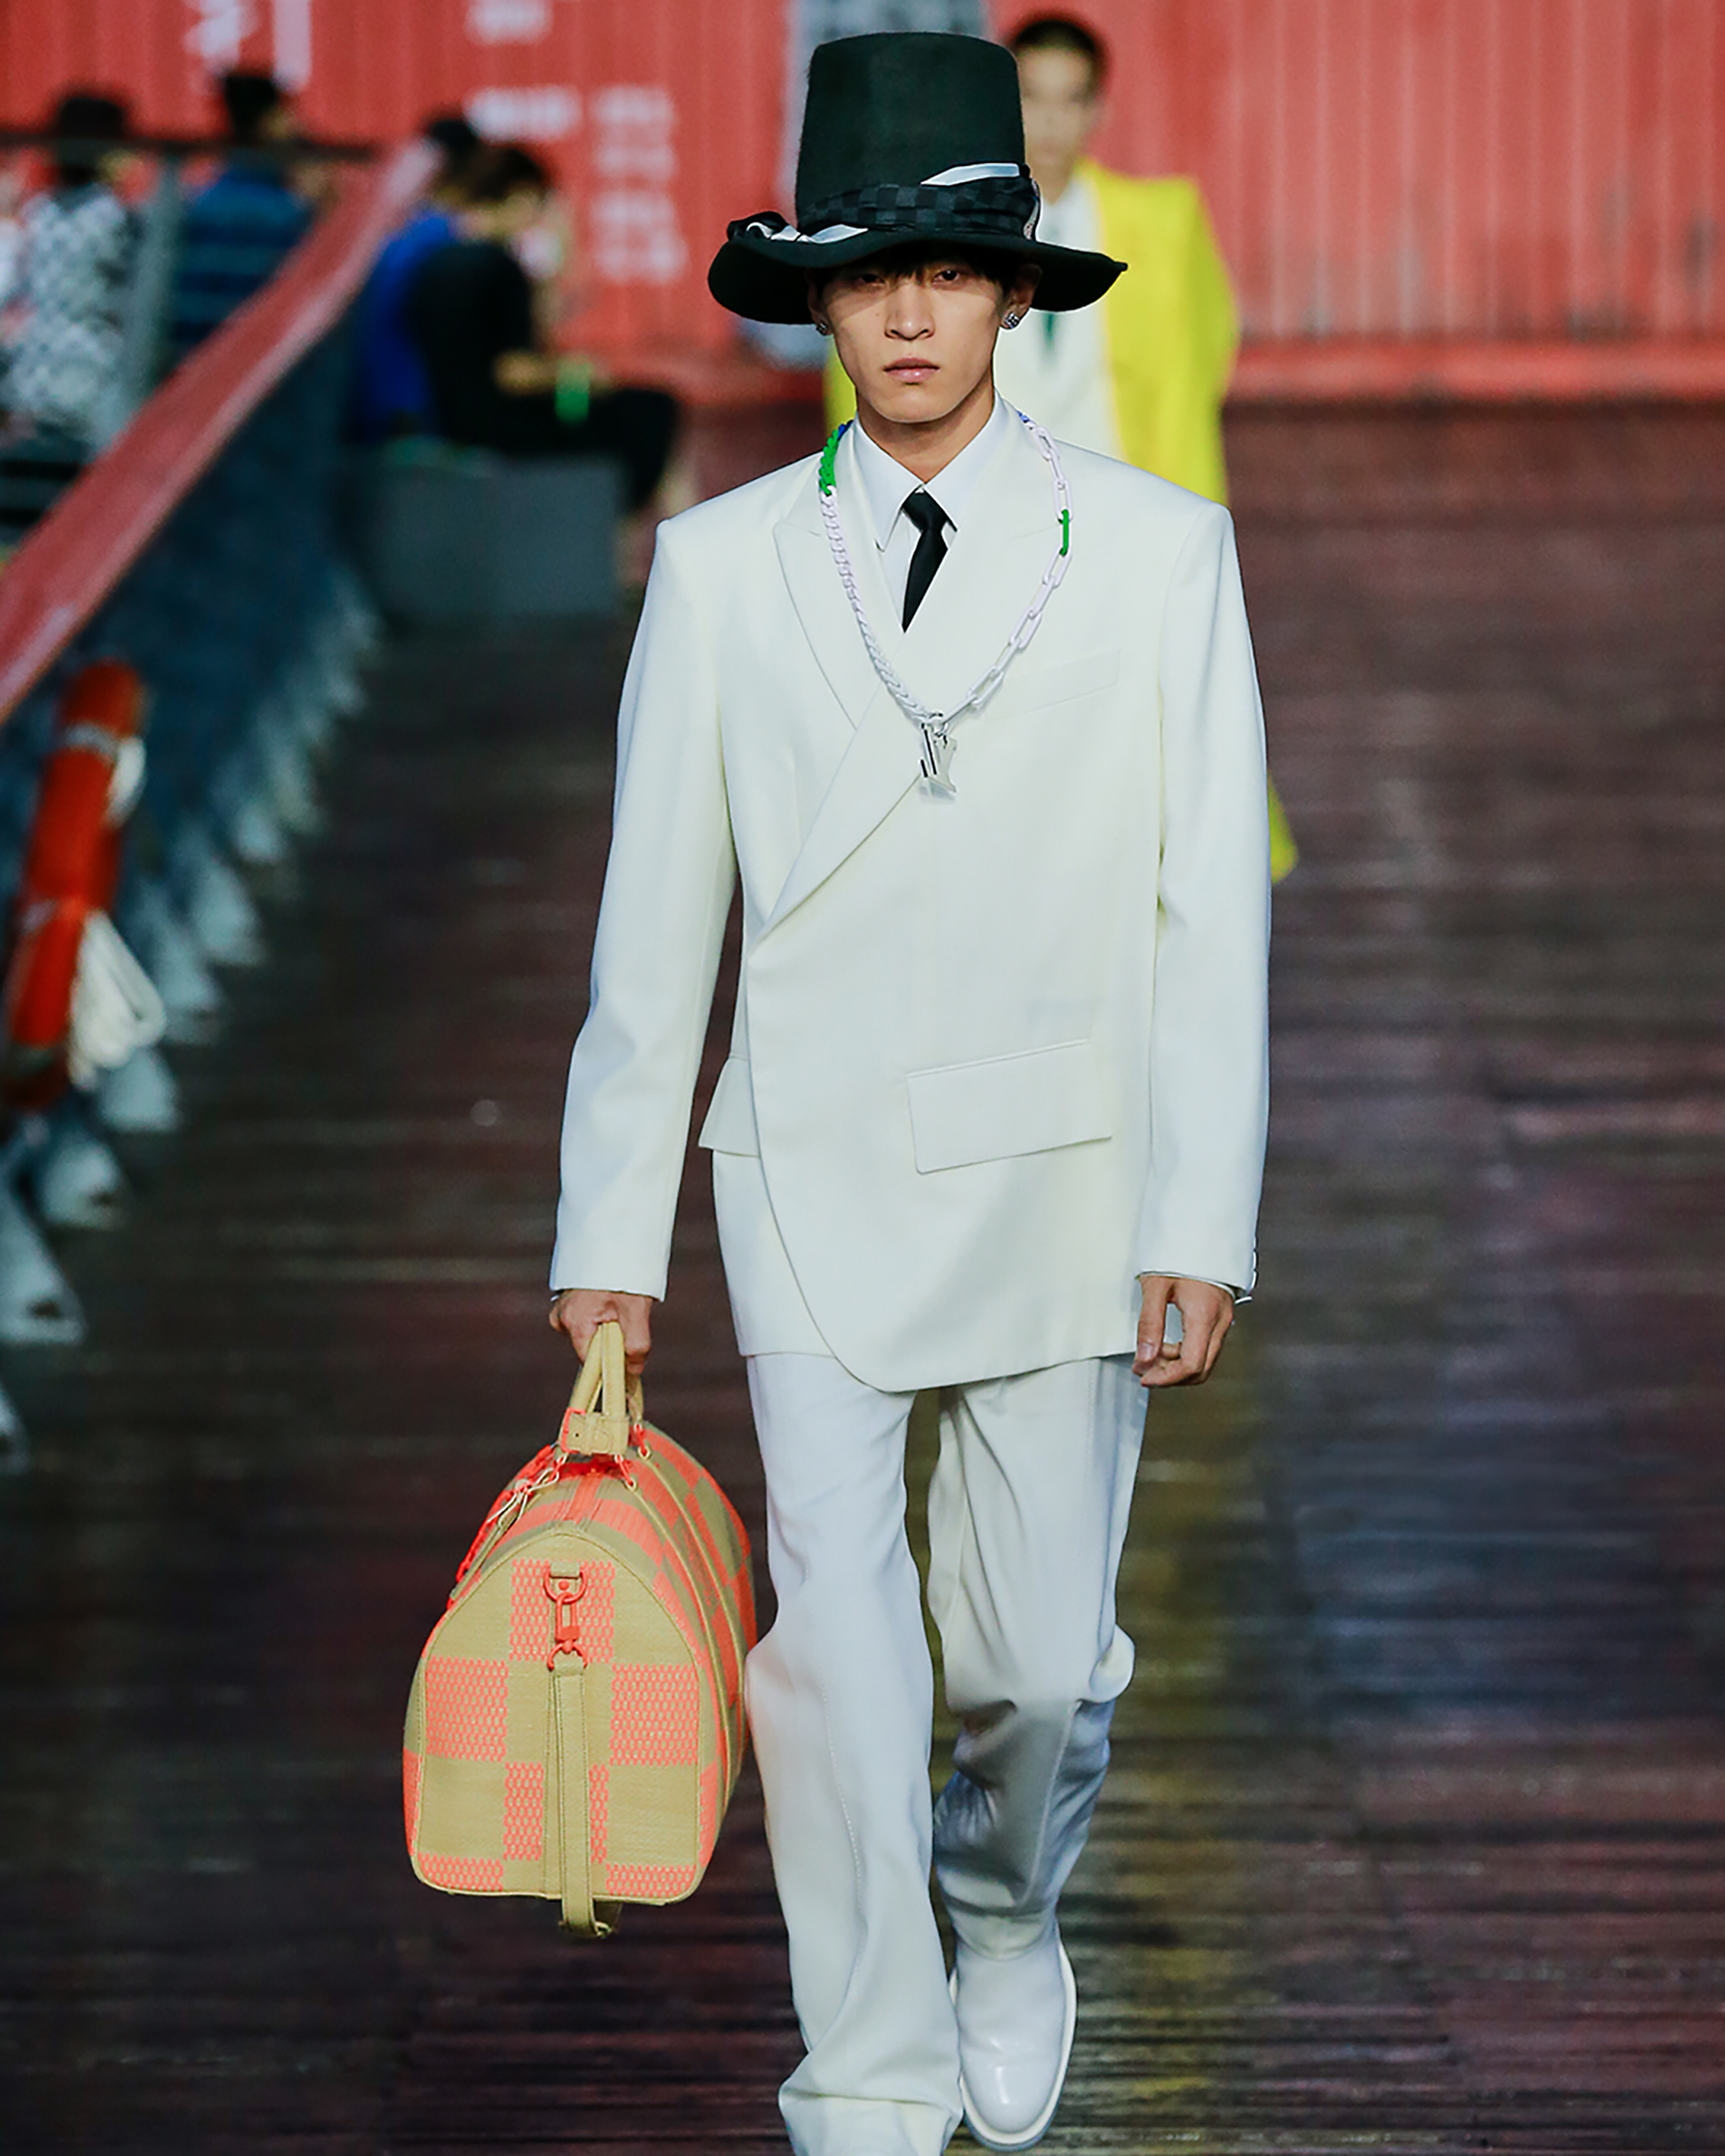 Review: Louis Vuitton Men's Spring/Summer 14 – Sooo Fabulous!